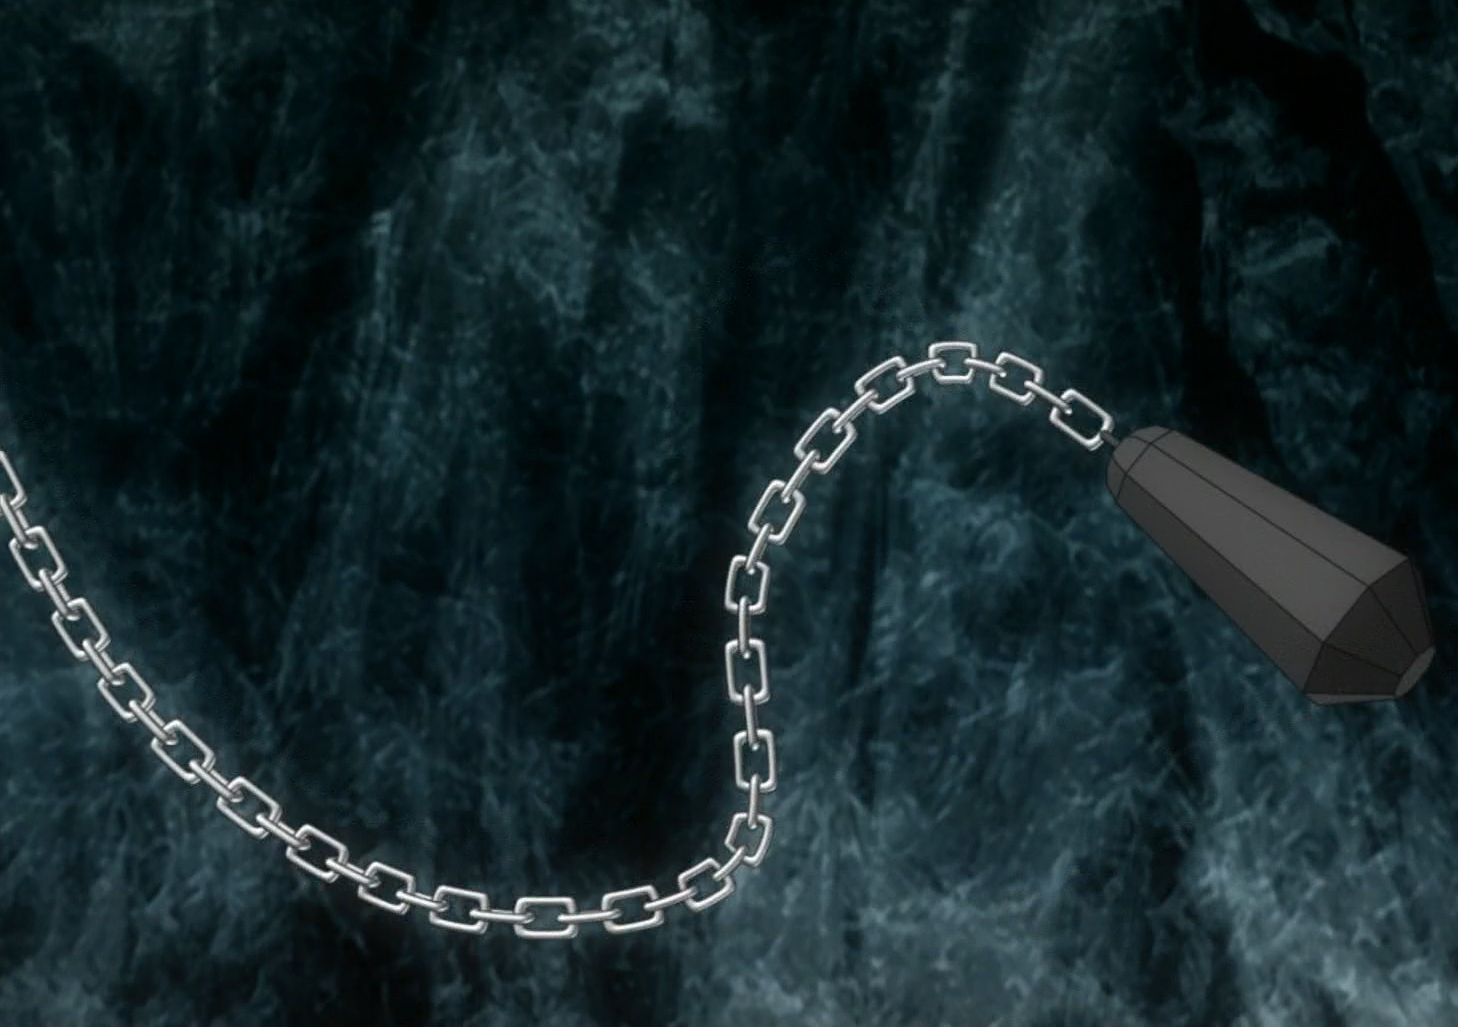 How chain got her chains. - animé photo (14974959) - fanpop